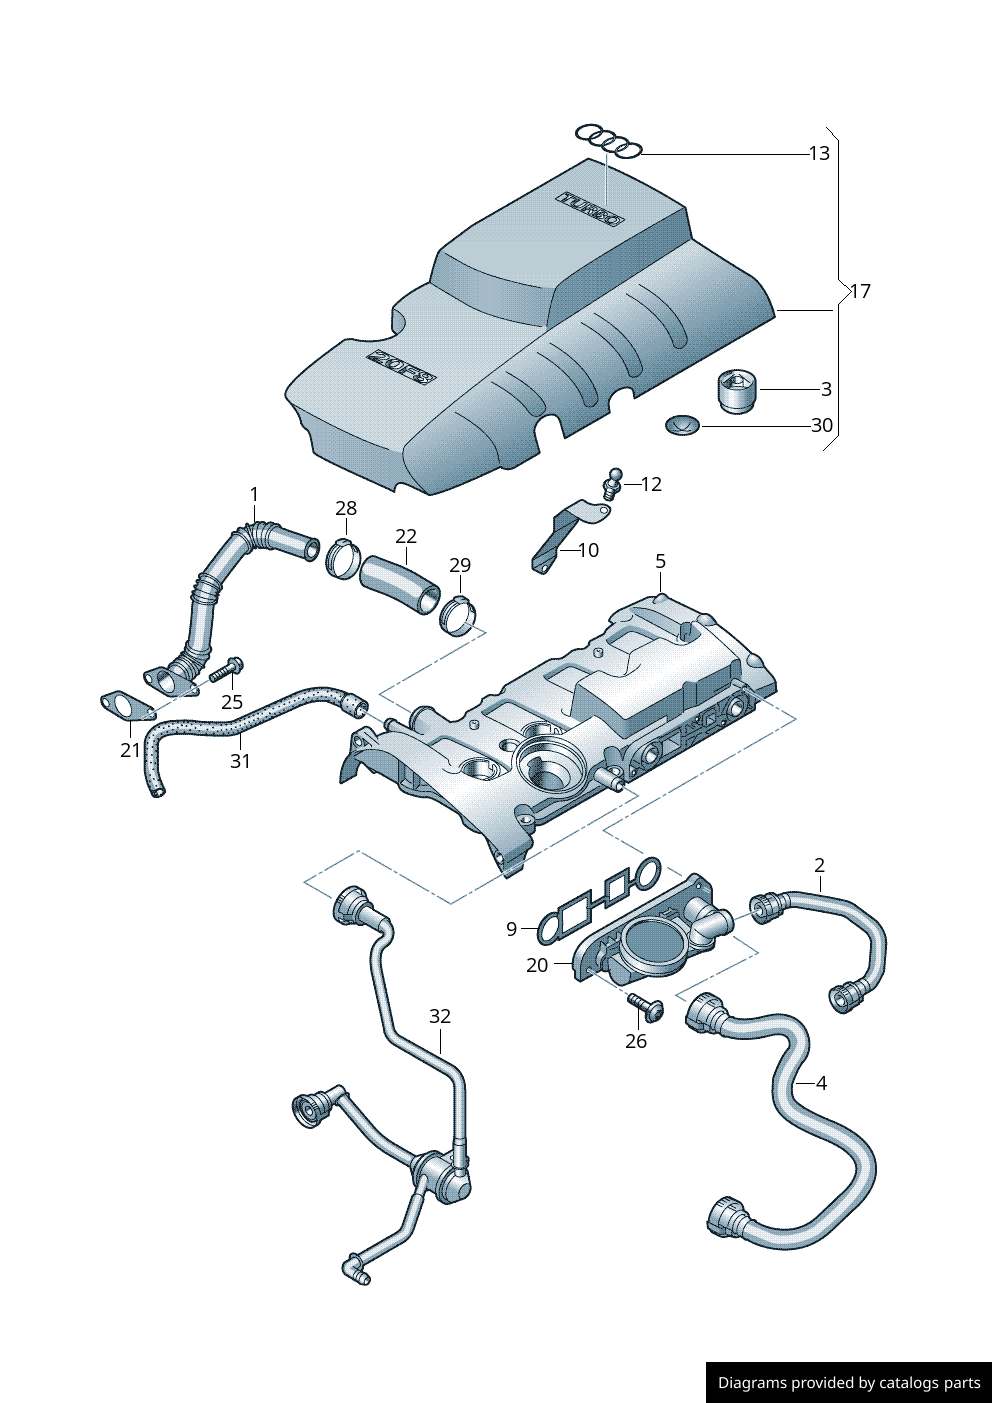 Genuine OEM Engine Crankcase Breather Hose for Volkswagen 06F103215B 